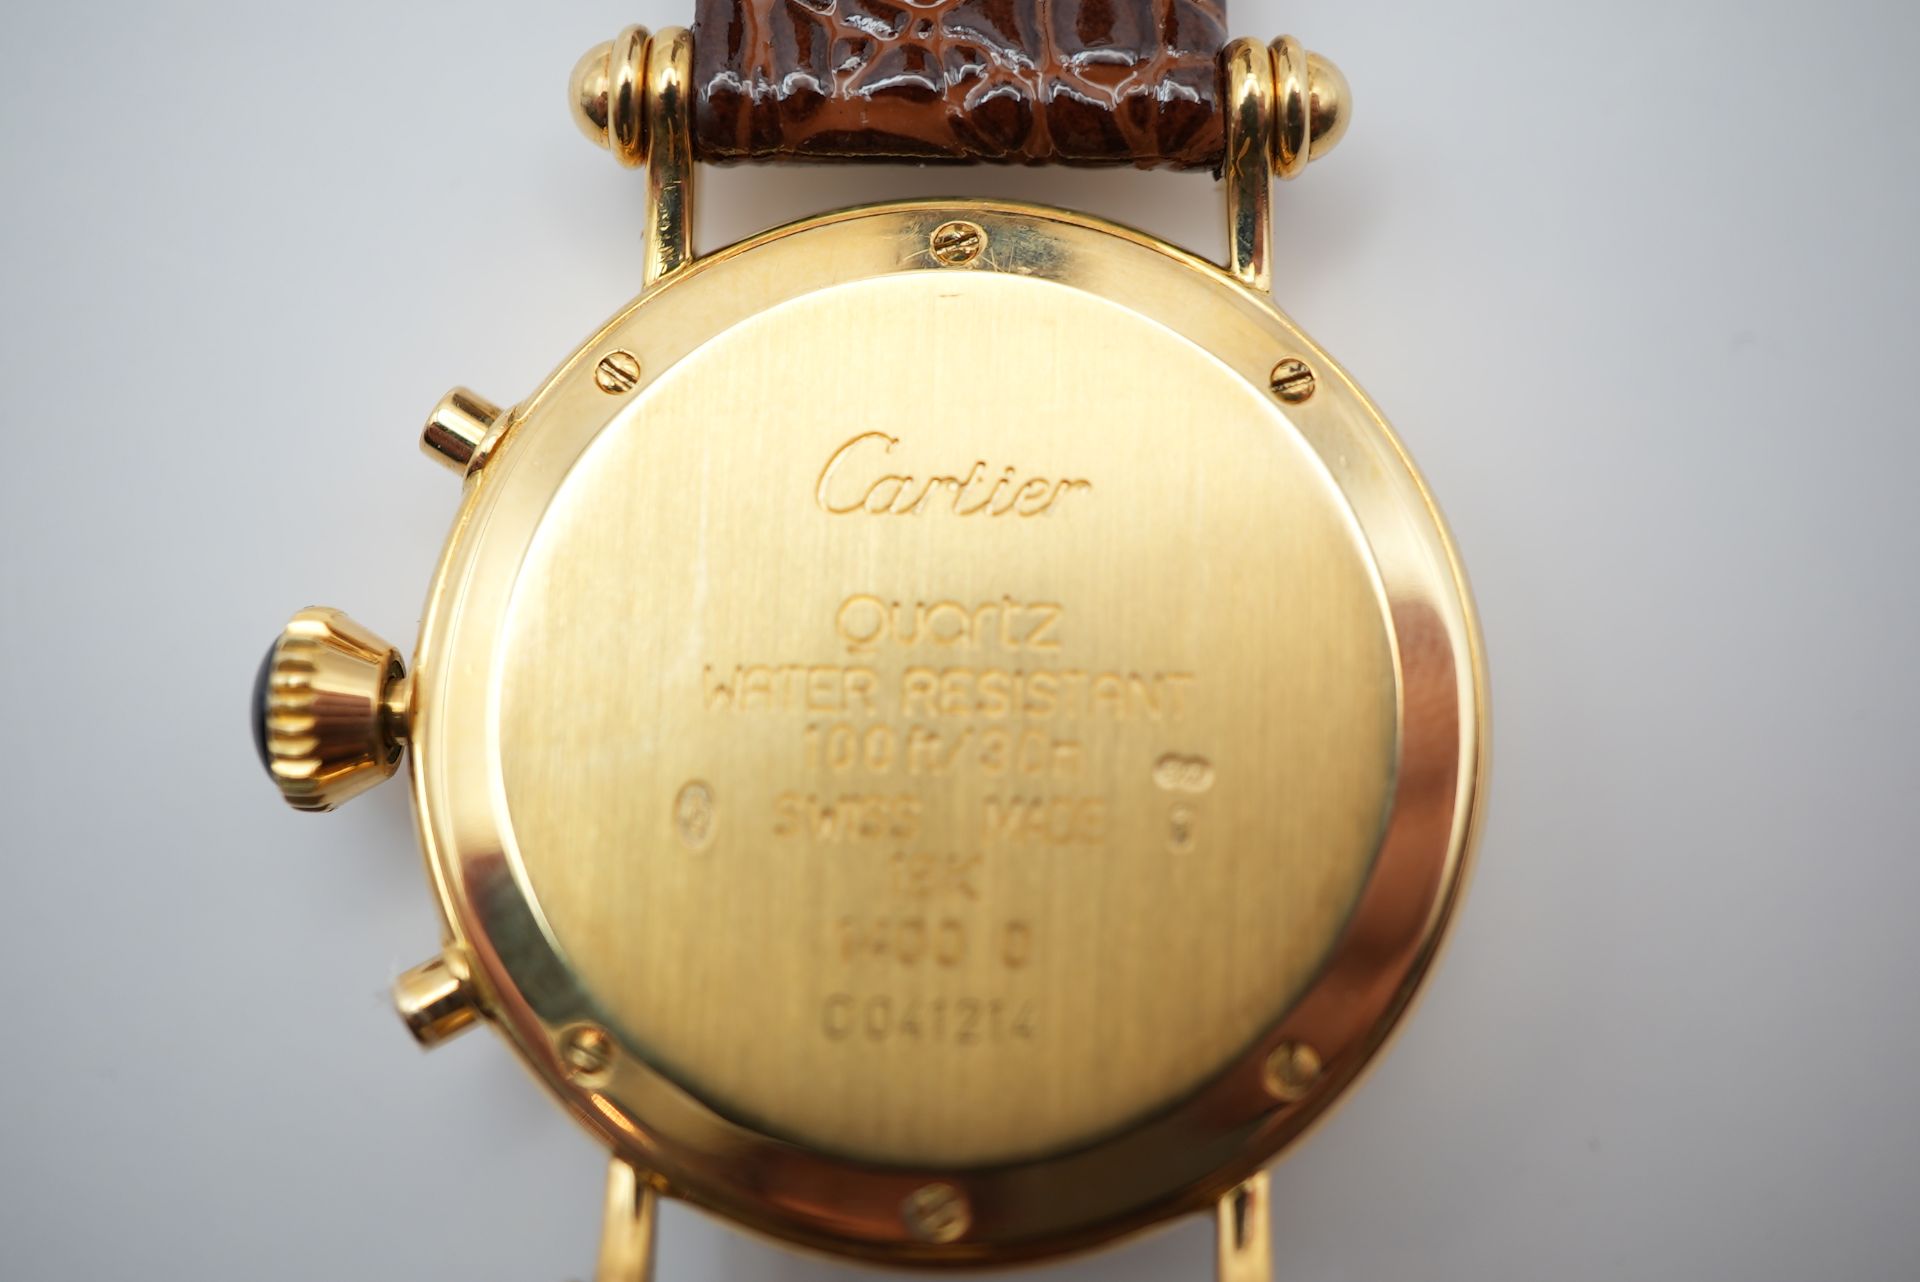 Cartier Diabolo Armbanduhr Gold 750 - Image 4 of 4